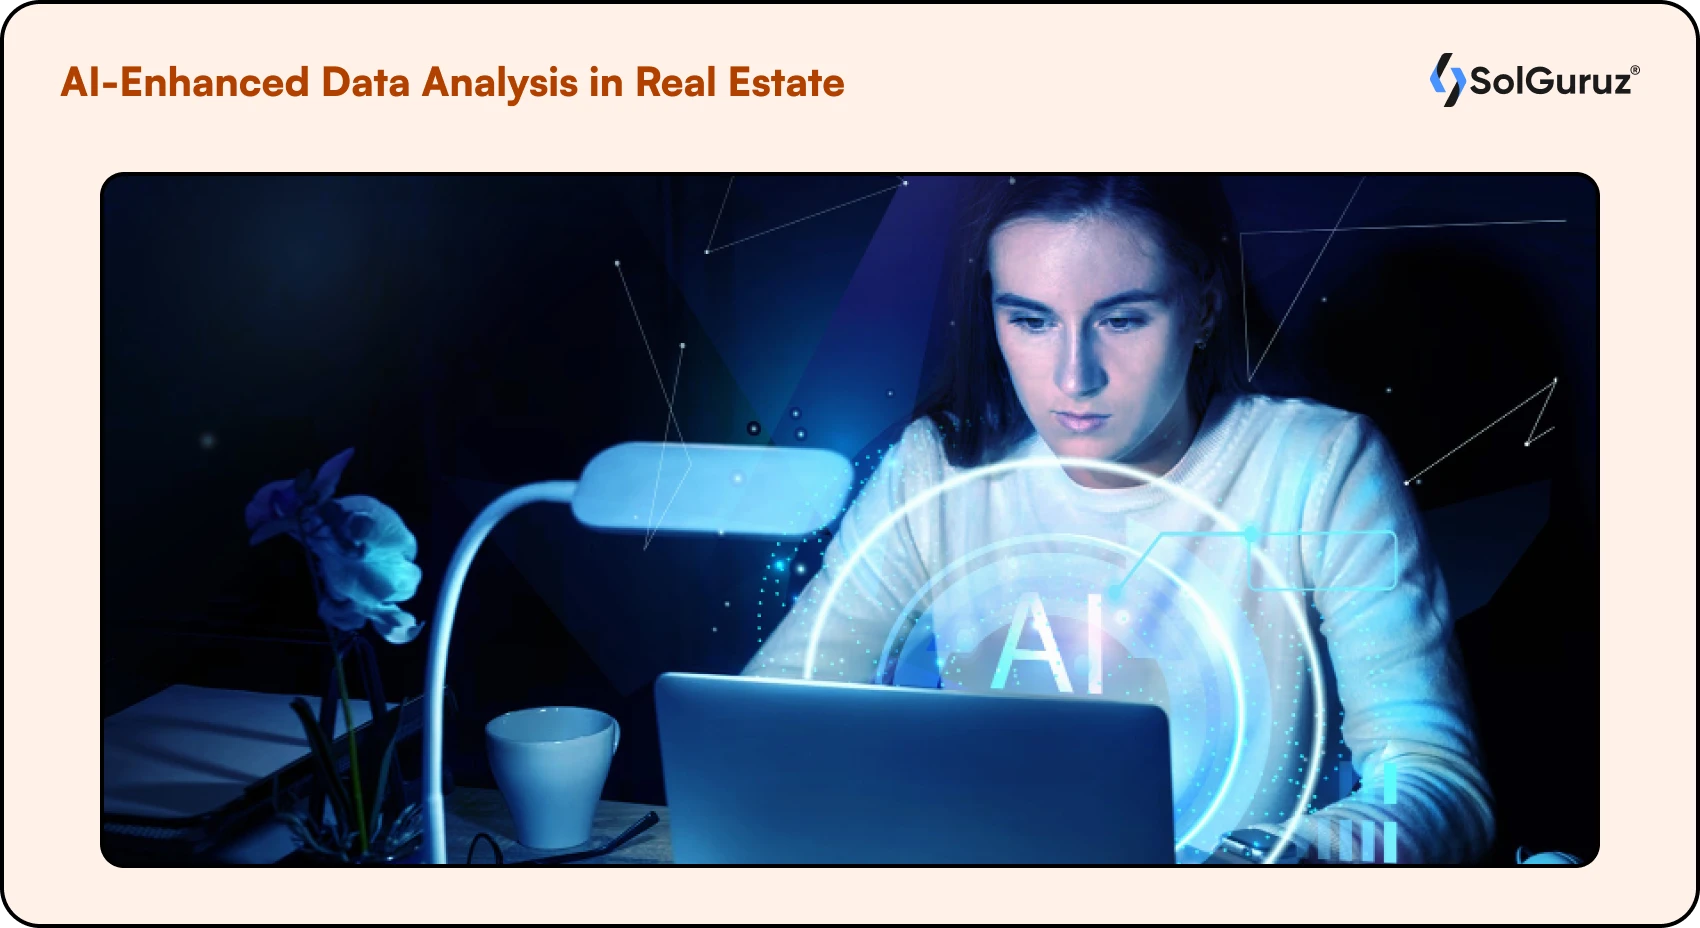 AI-Enhanced Data Analysis in Real Estate